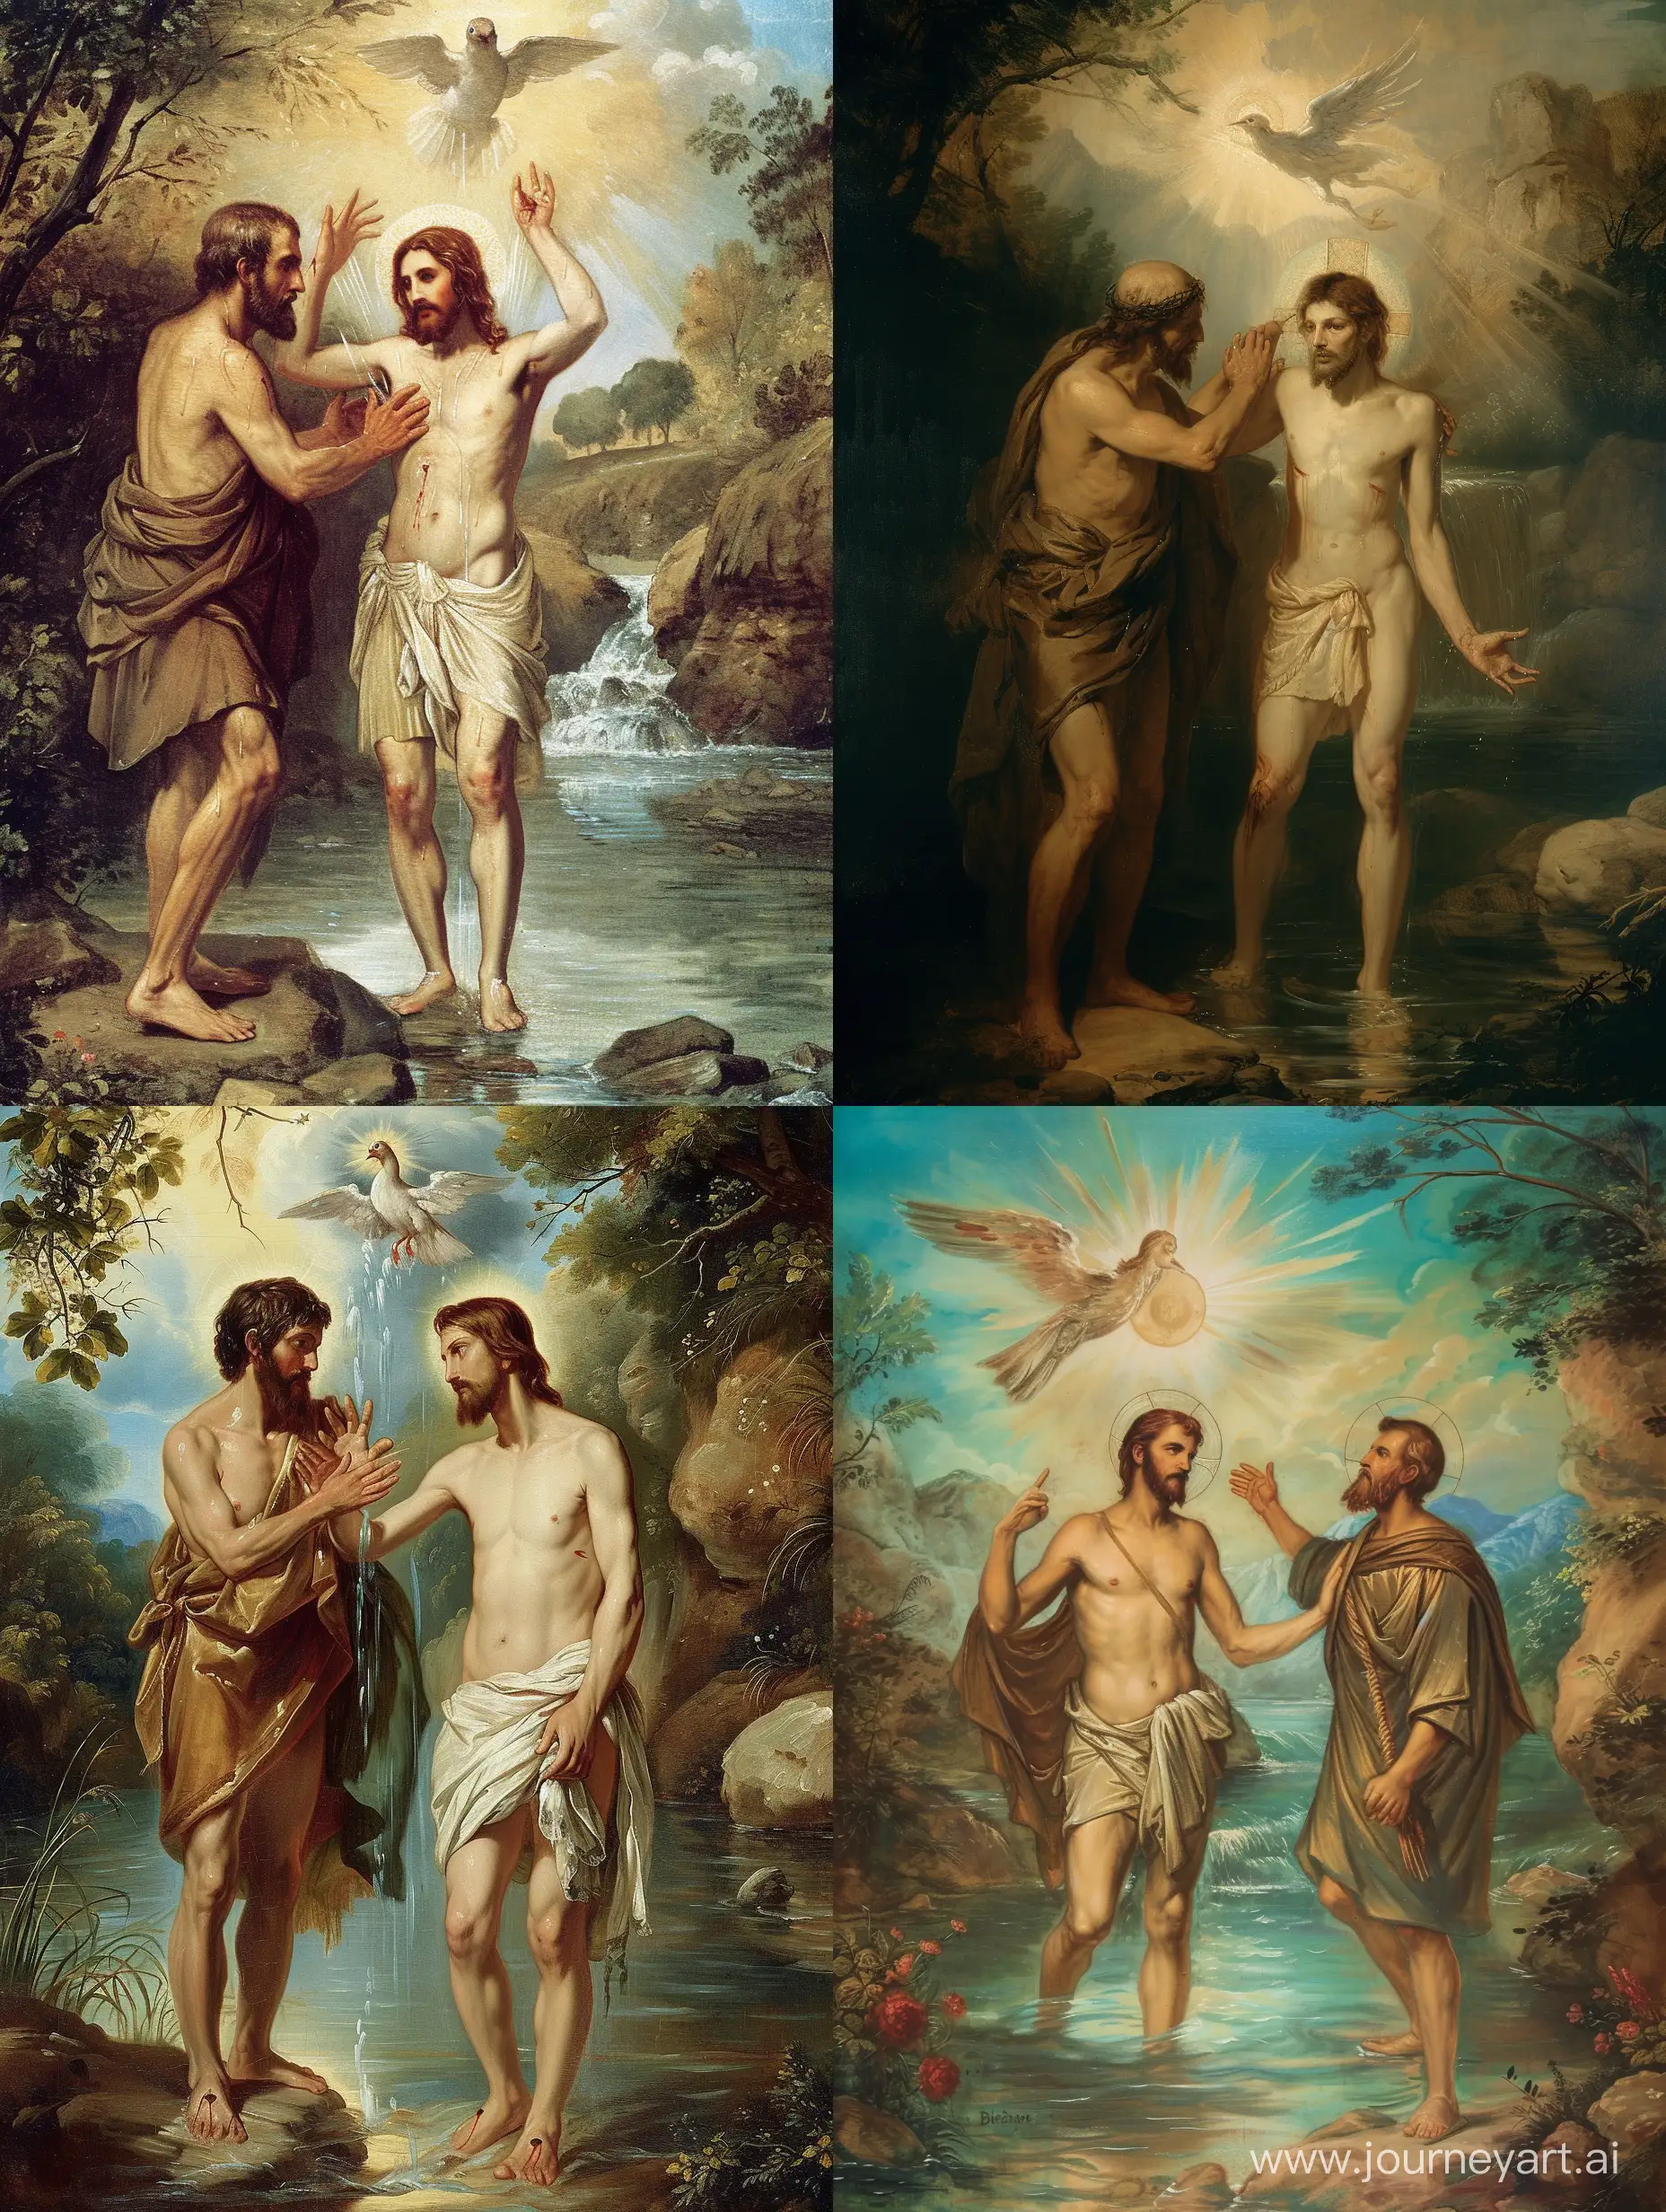 "Baptism of Jesus painting: John the Baptist, Jordan River, dove, divine revelation, religious symbolism."